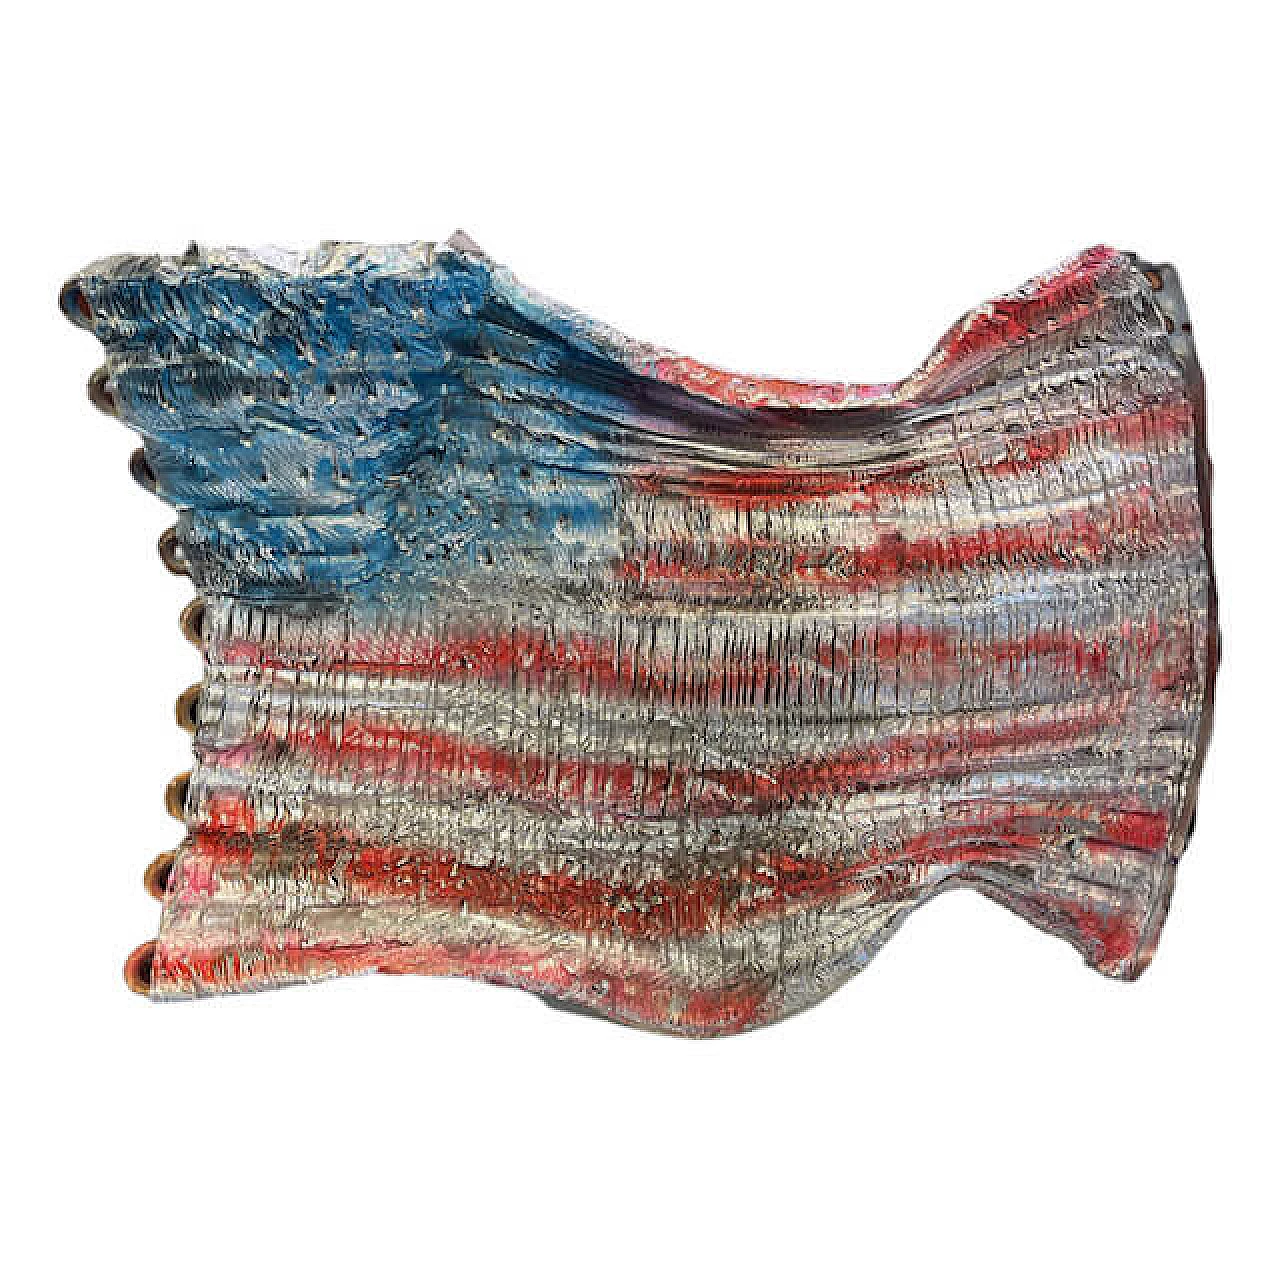 M'HORÒ sculpture depicting the American flag 1